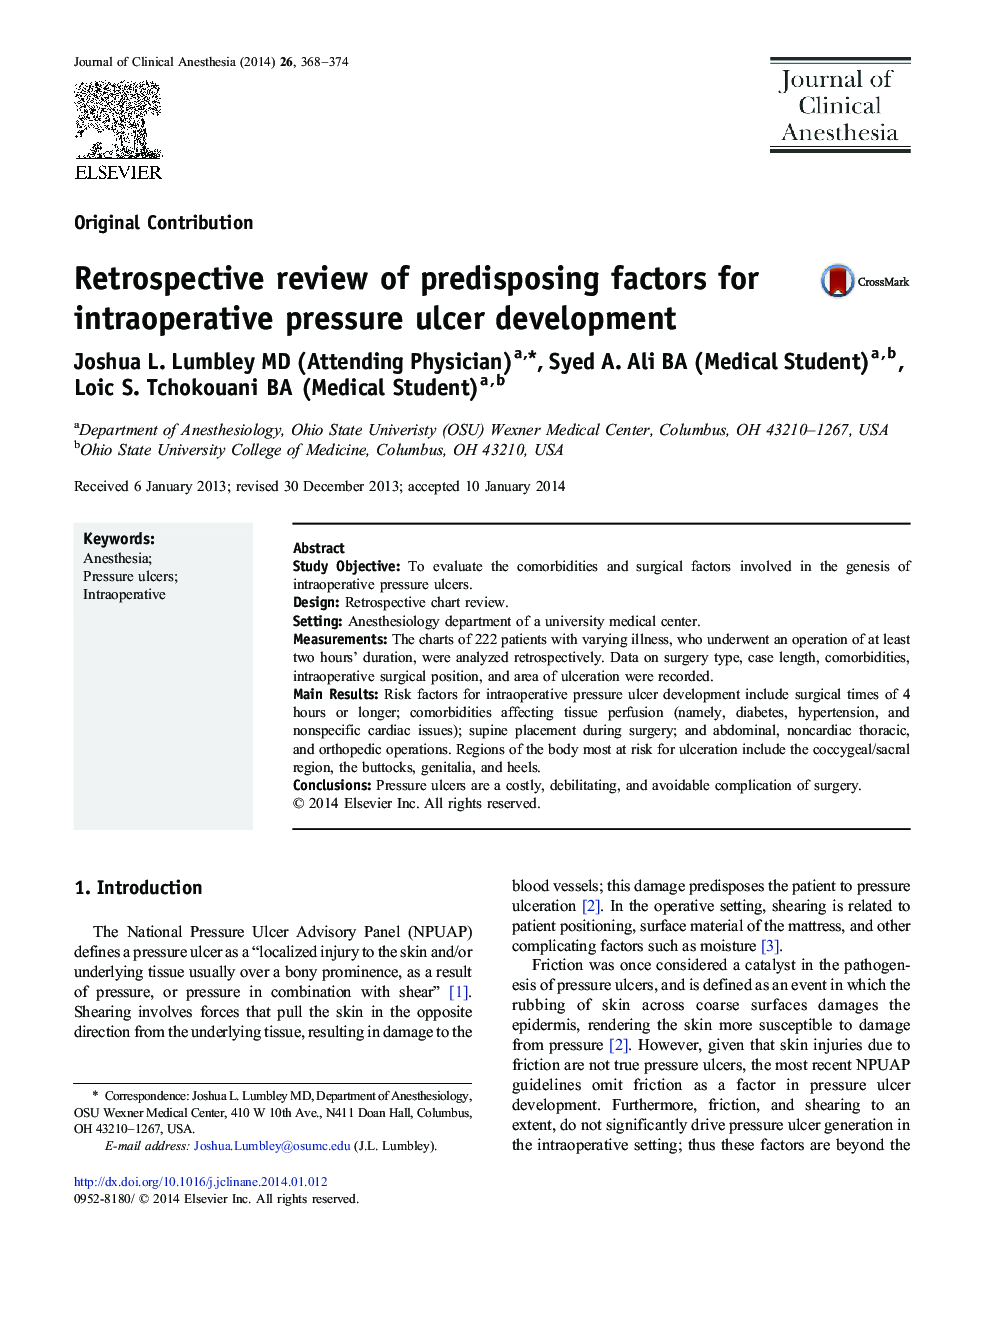 Retrospective review of predisposing factors for intraoperative pressure ulcer development